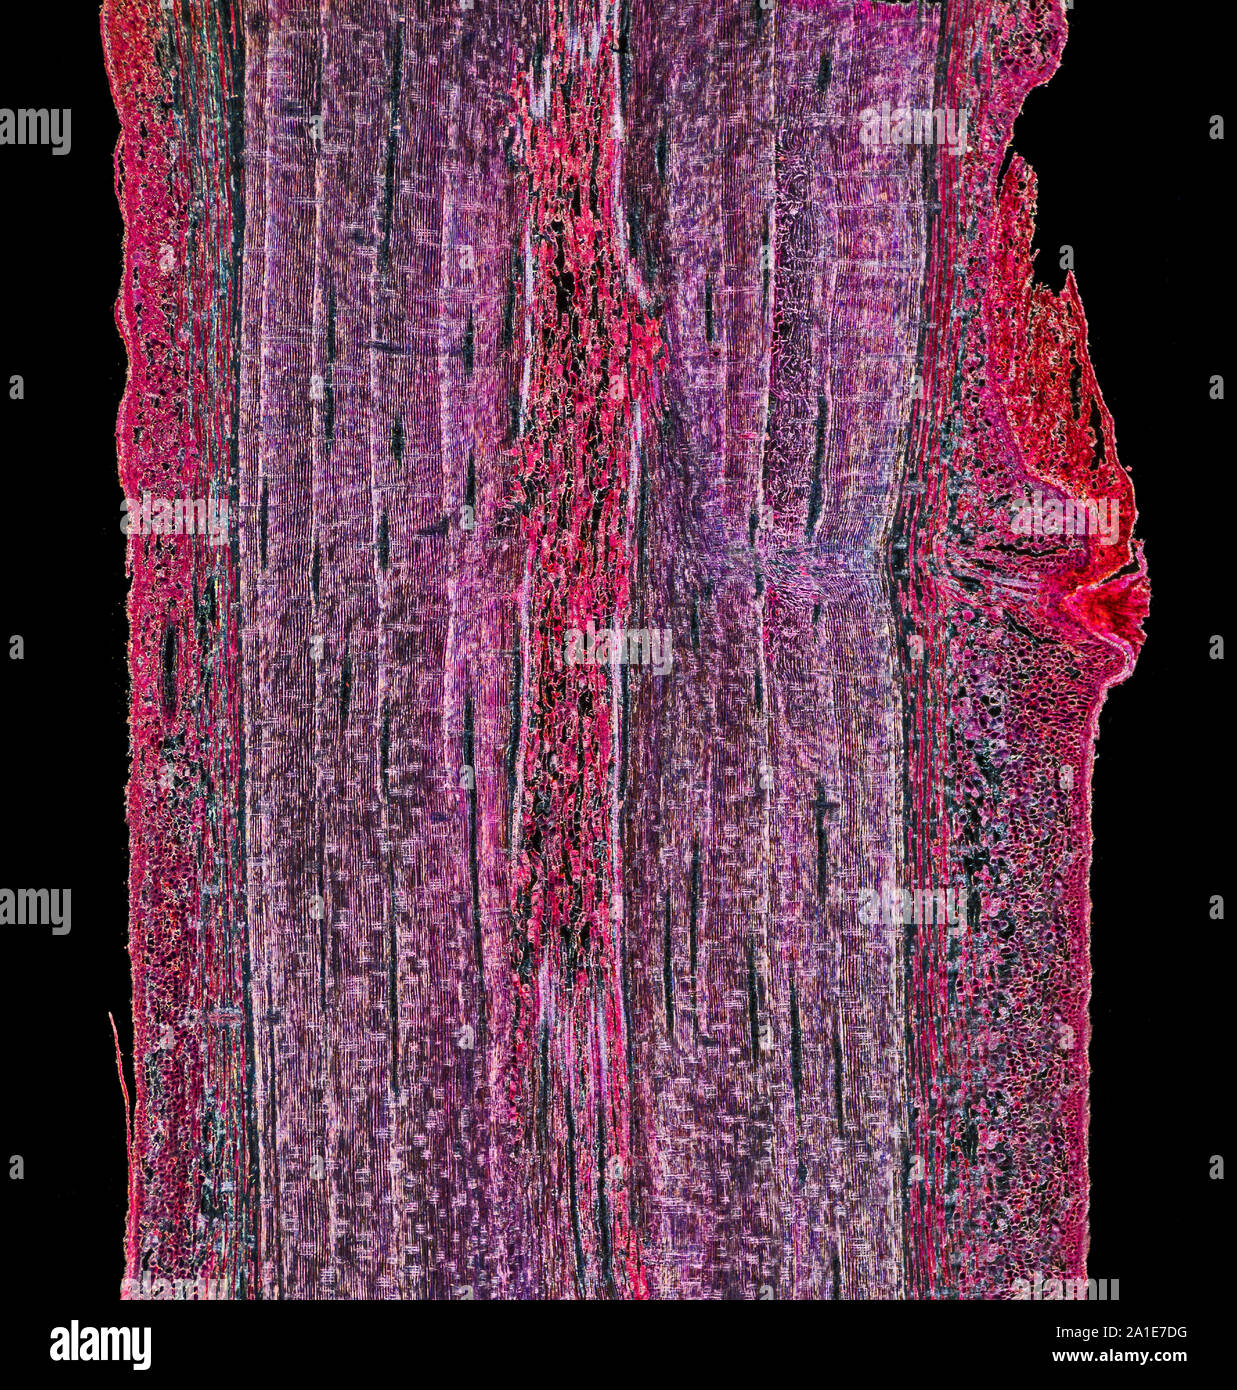 Pinus, old stem RLS, darkfield illumination photomicrograph Stock Photo